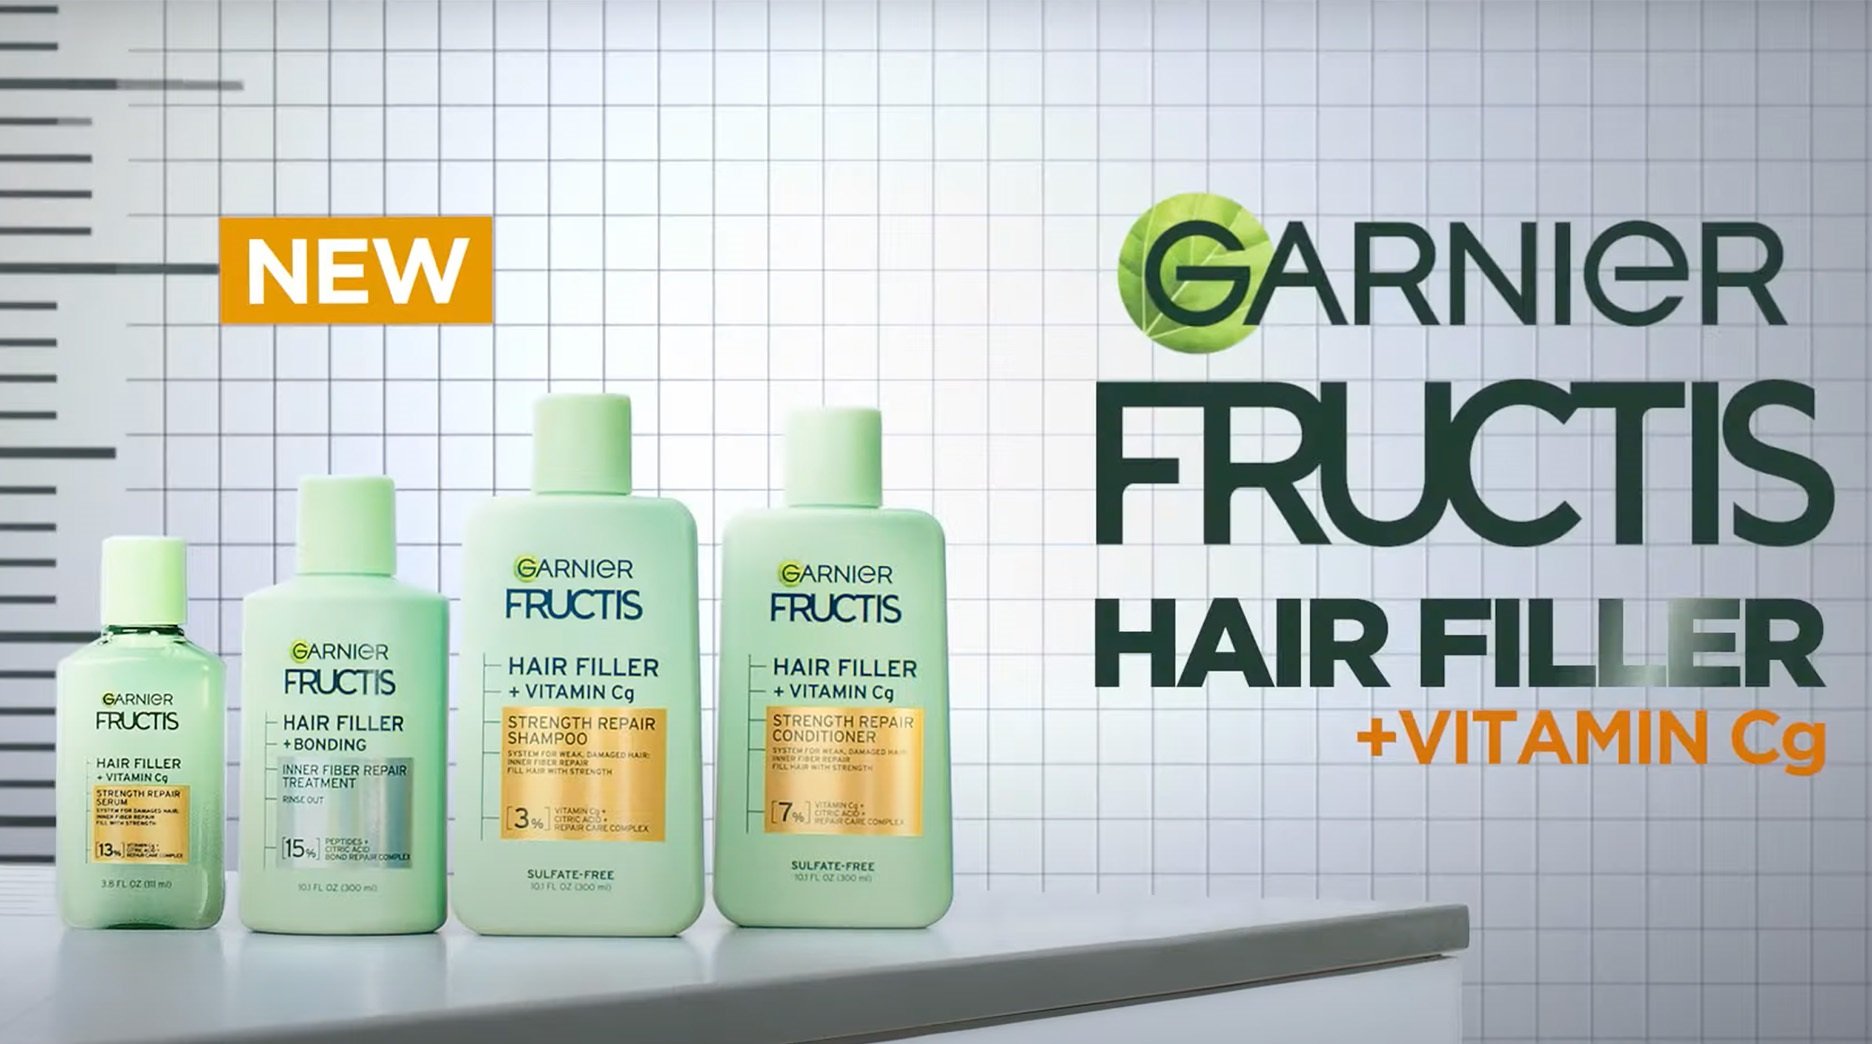 Hair filler treatments for damaged hair - Garnier